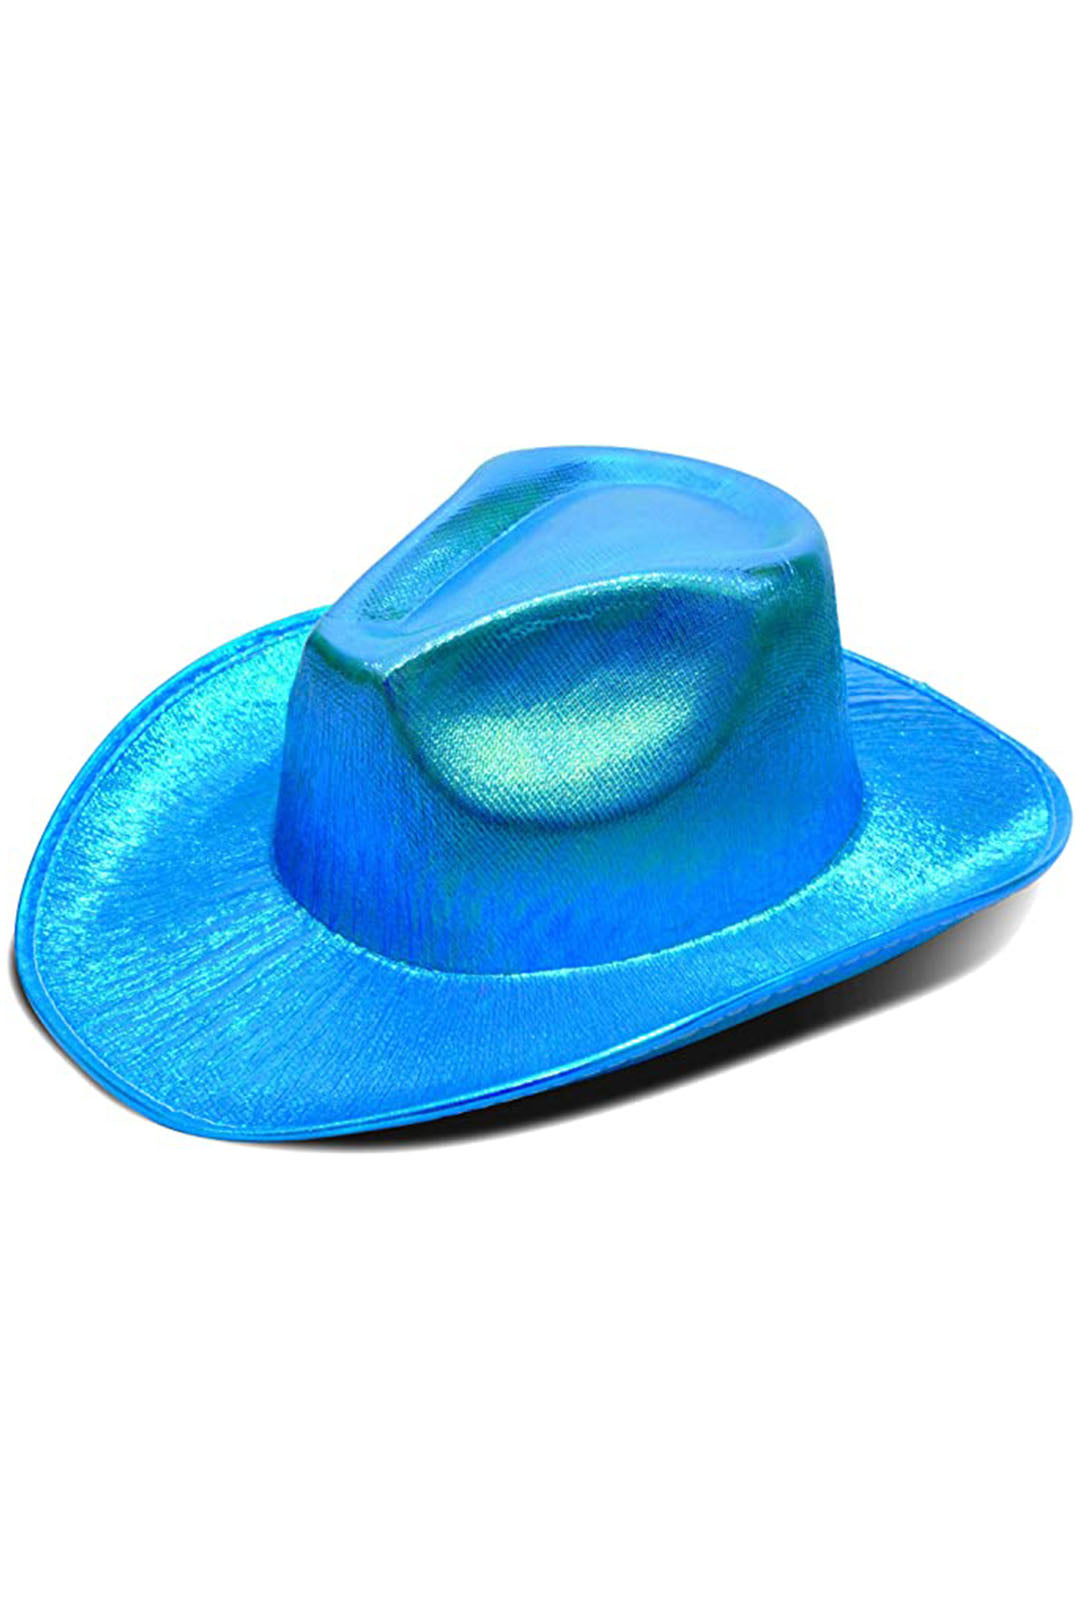 Iridescent Blue Cowboy Hat